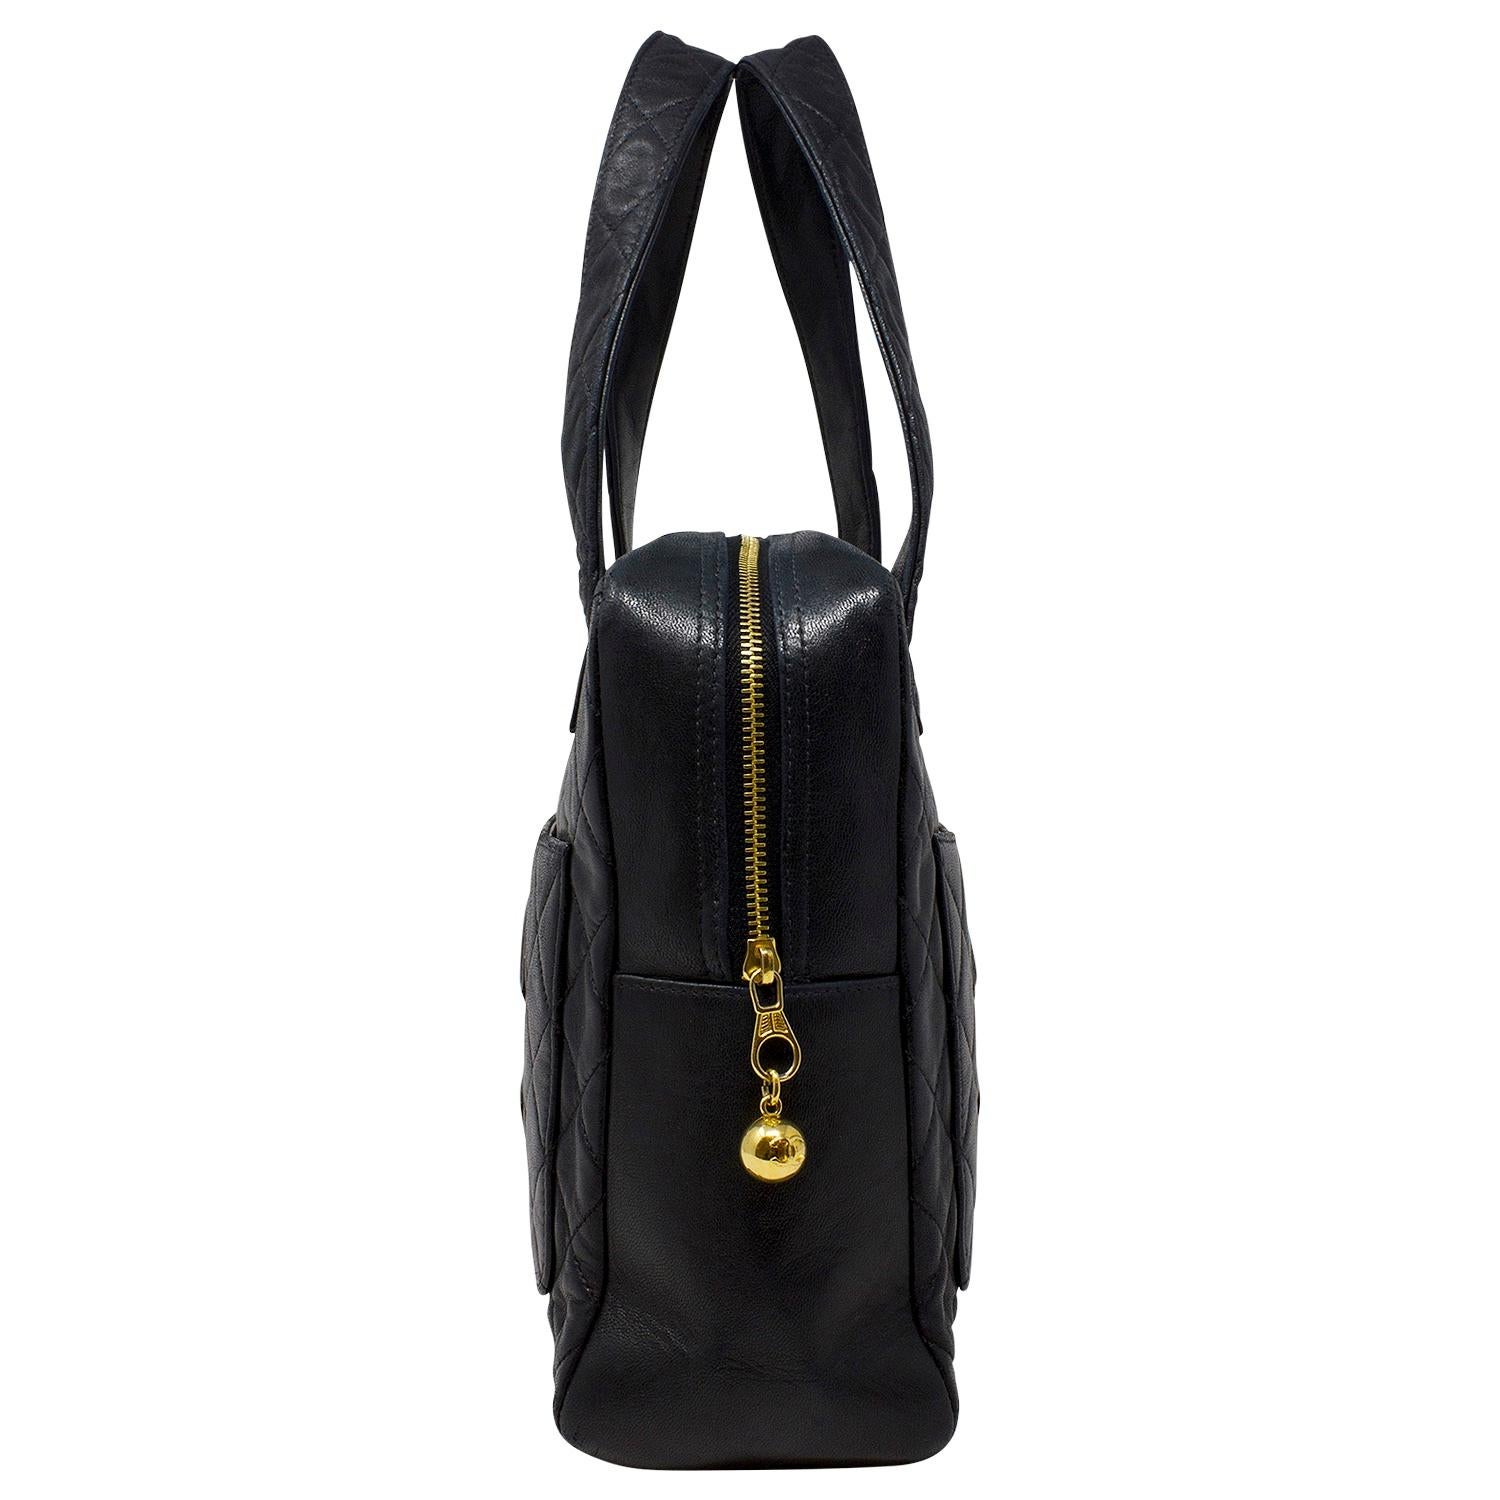 Chanel Black CC Double Logo Bag In Excellent Condition For Sale In Atlanta, GA